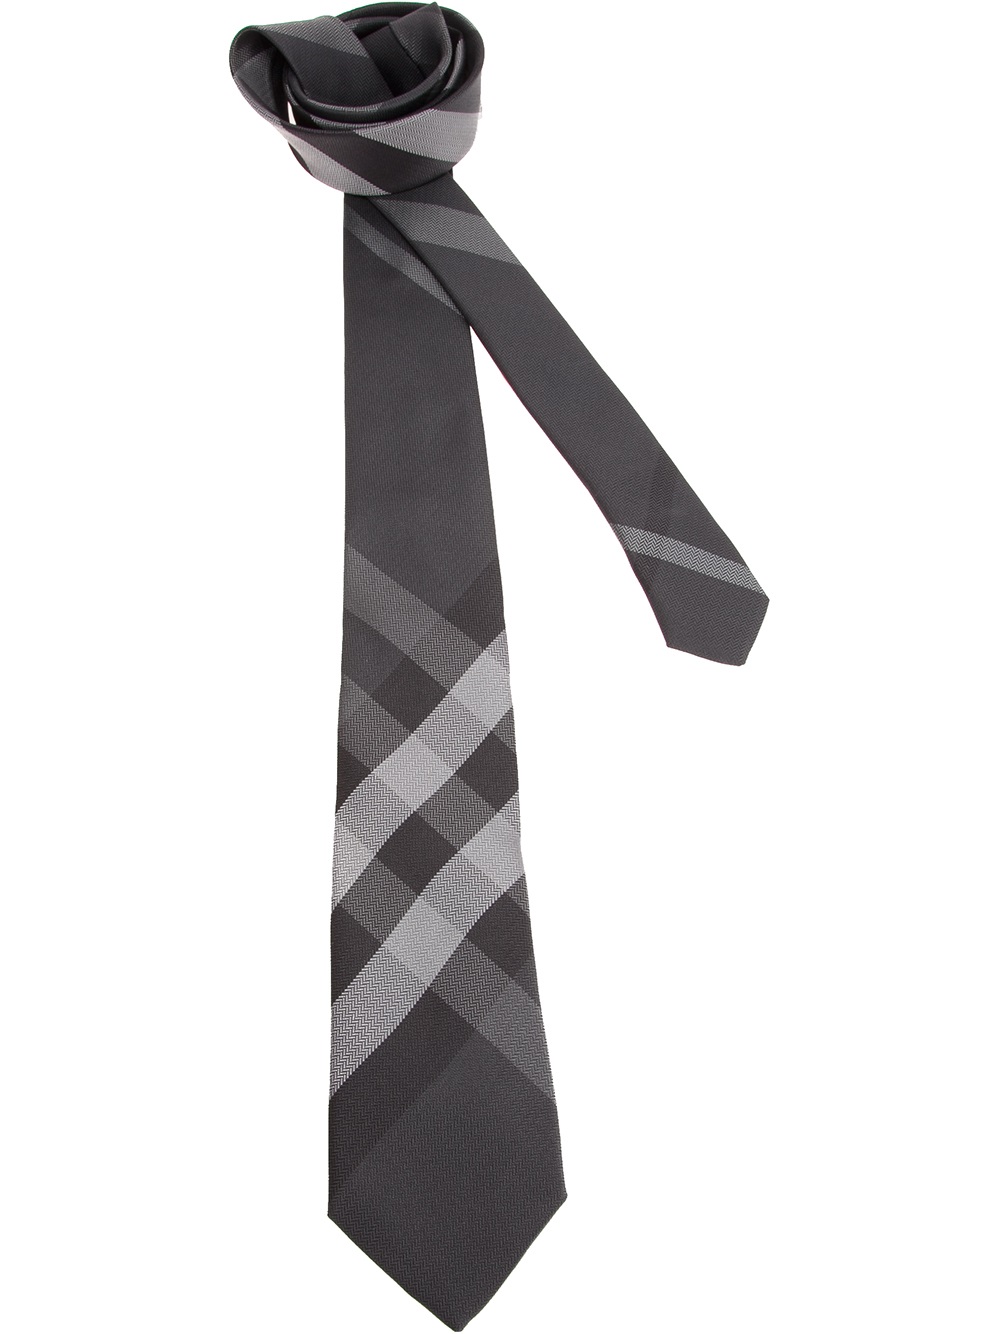 Burberry Nova Check Tie in Grey (Gray 